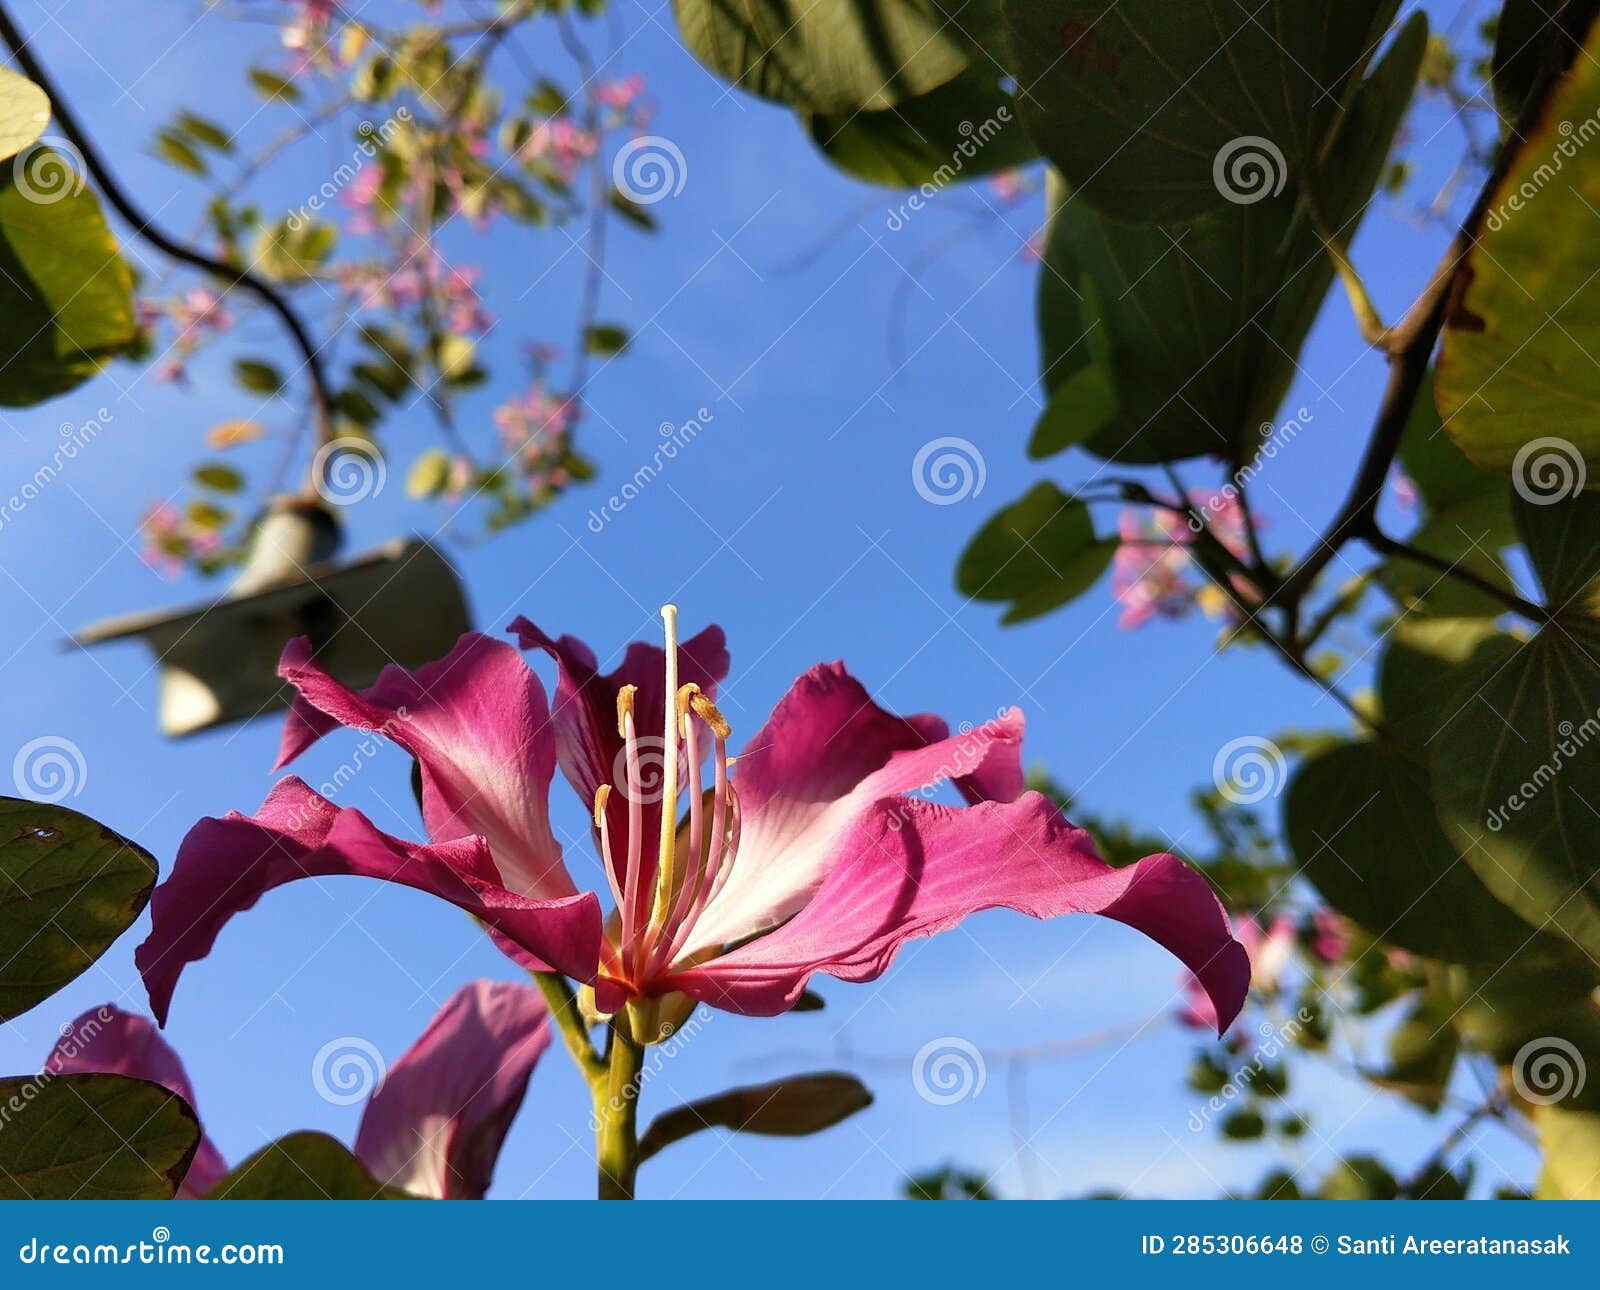 pink bauhinia purpura flower with blue sky background